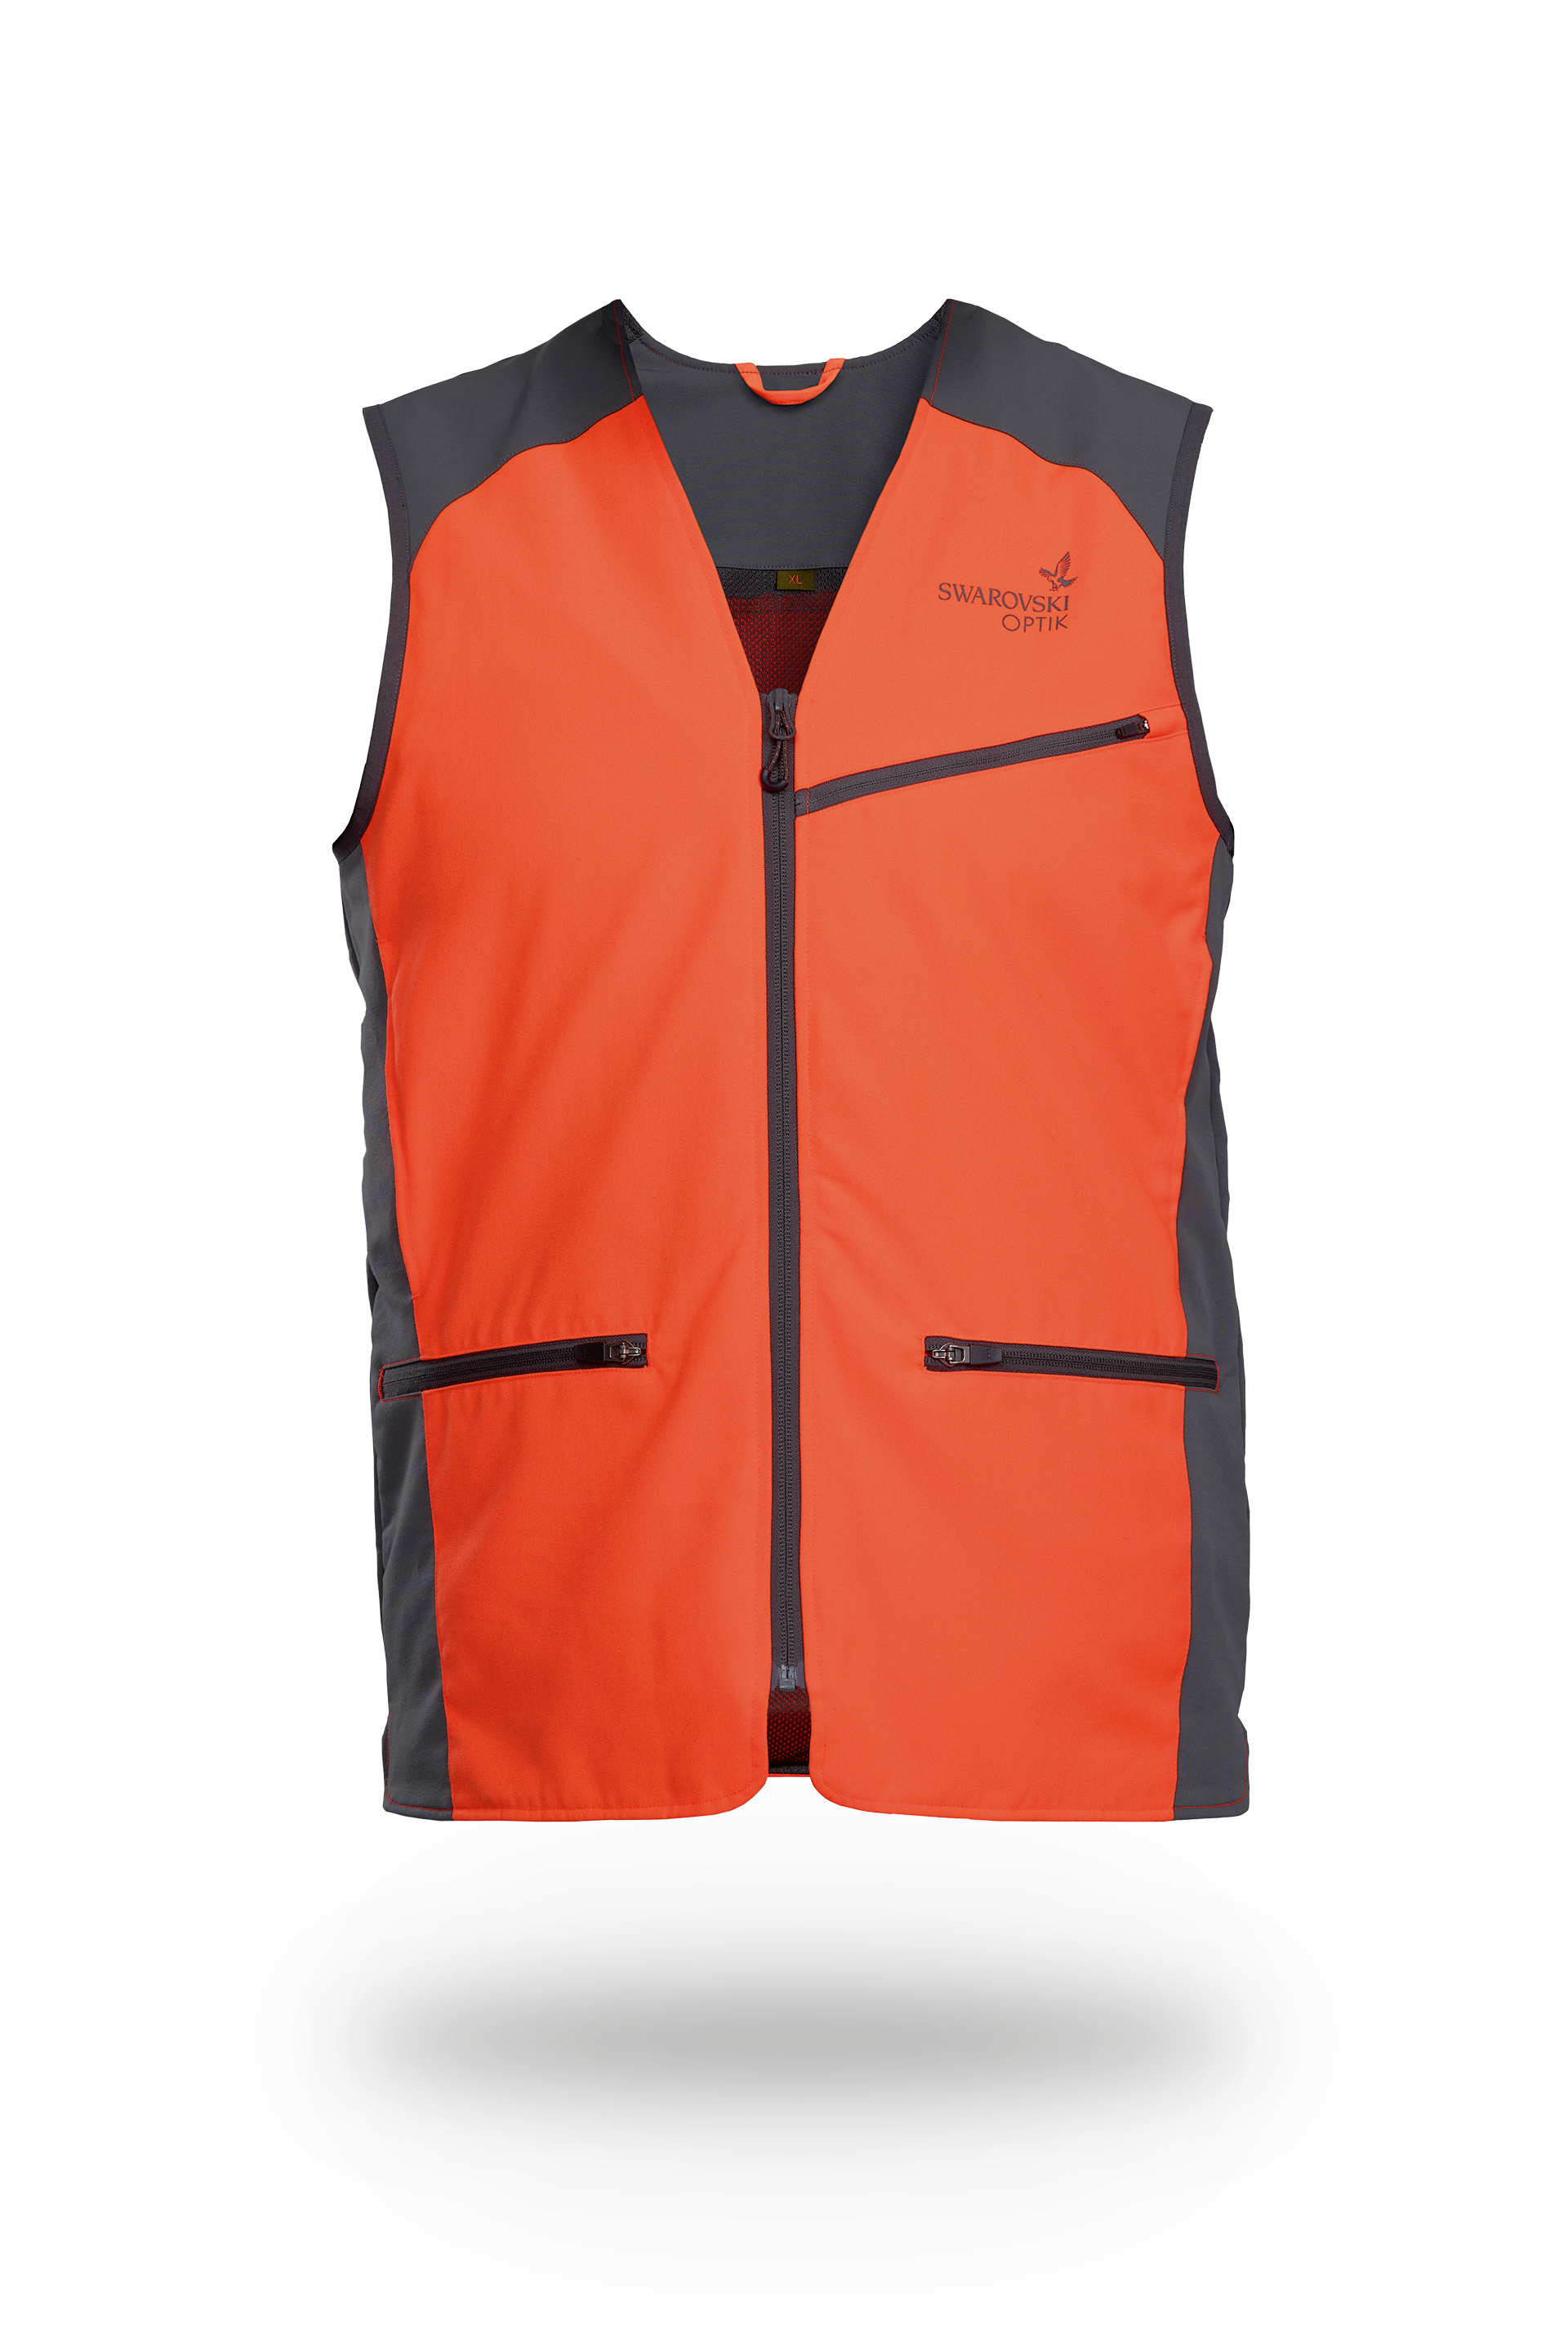 SWAROVSKI OPTIK gear collection, hunting vest